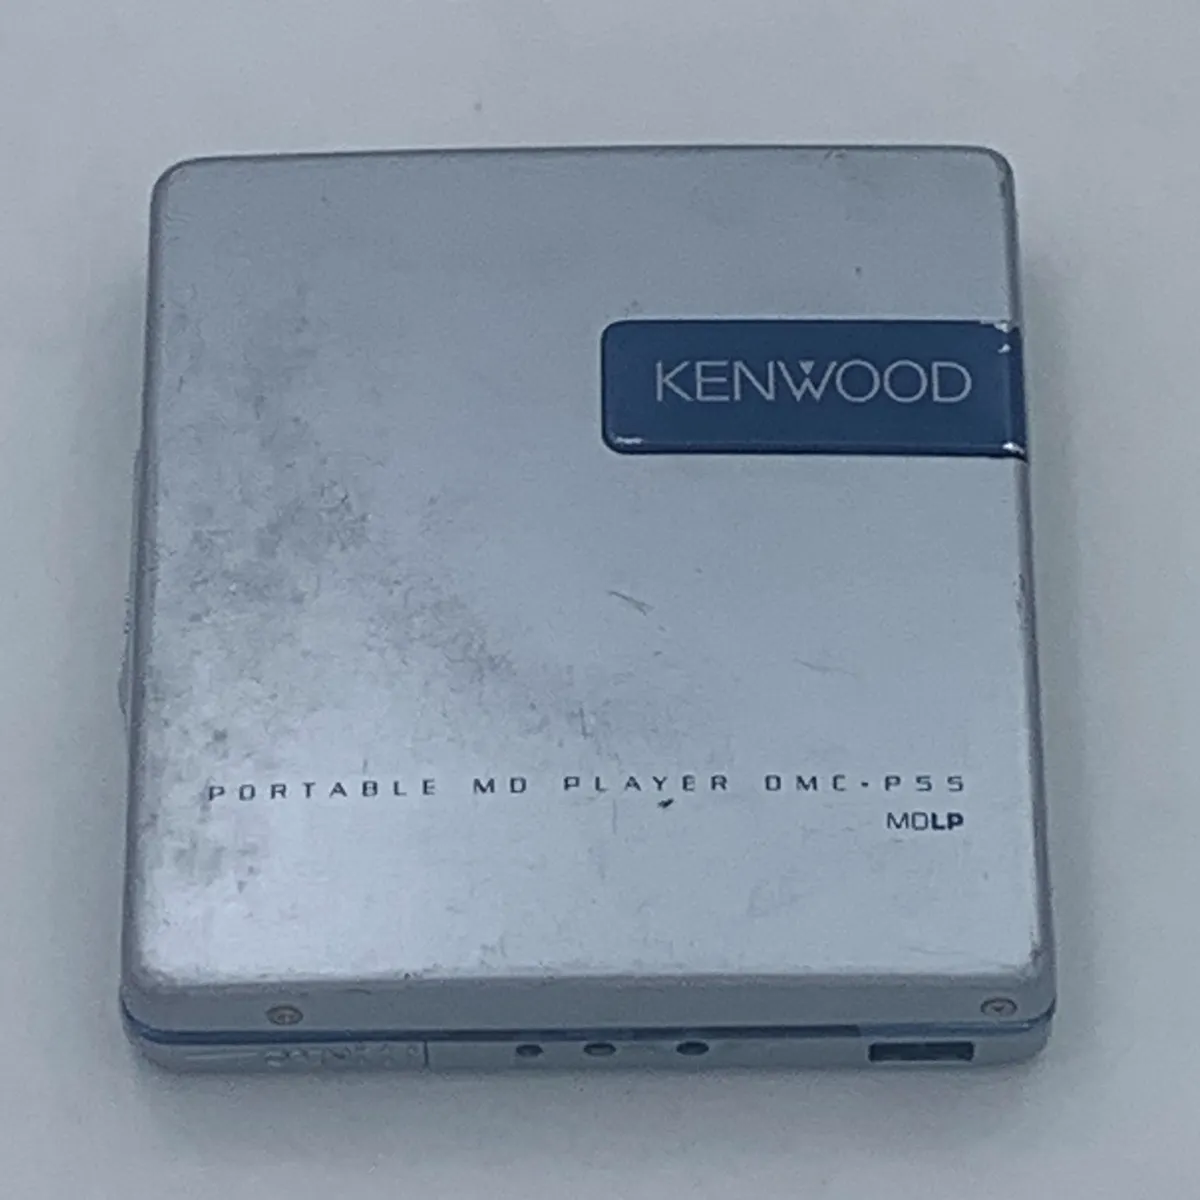 KENWOOD DMC-P55